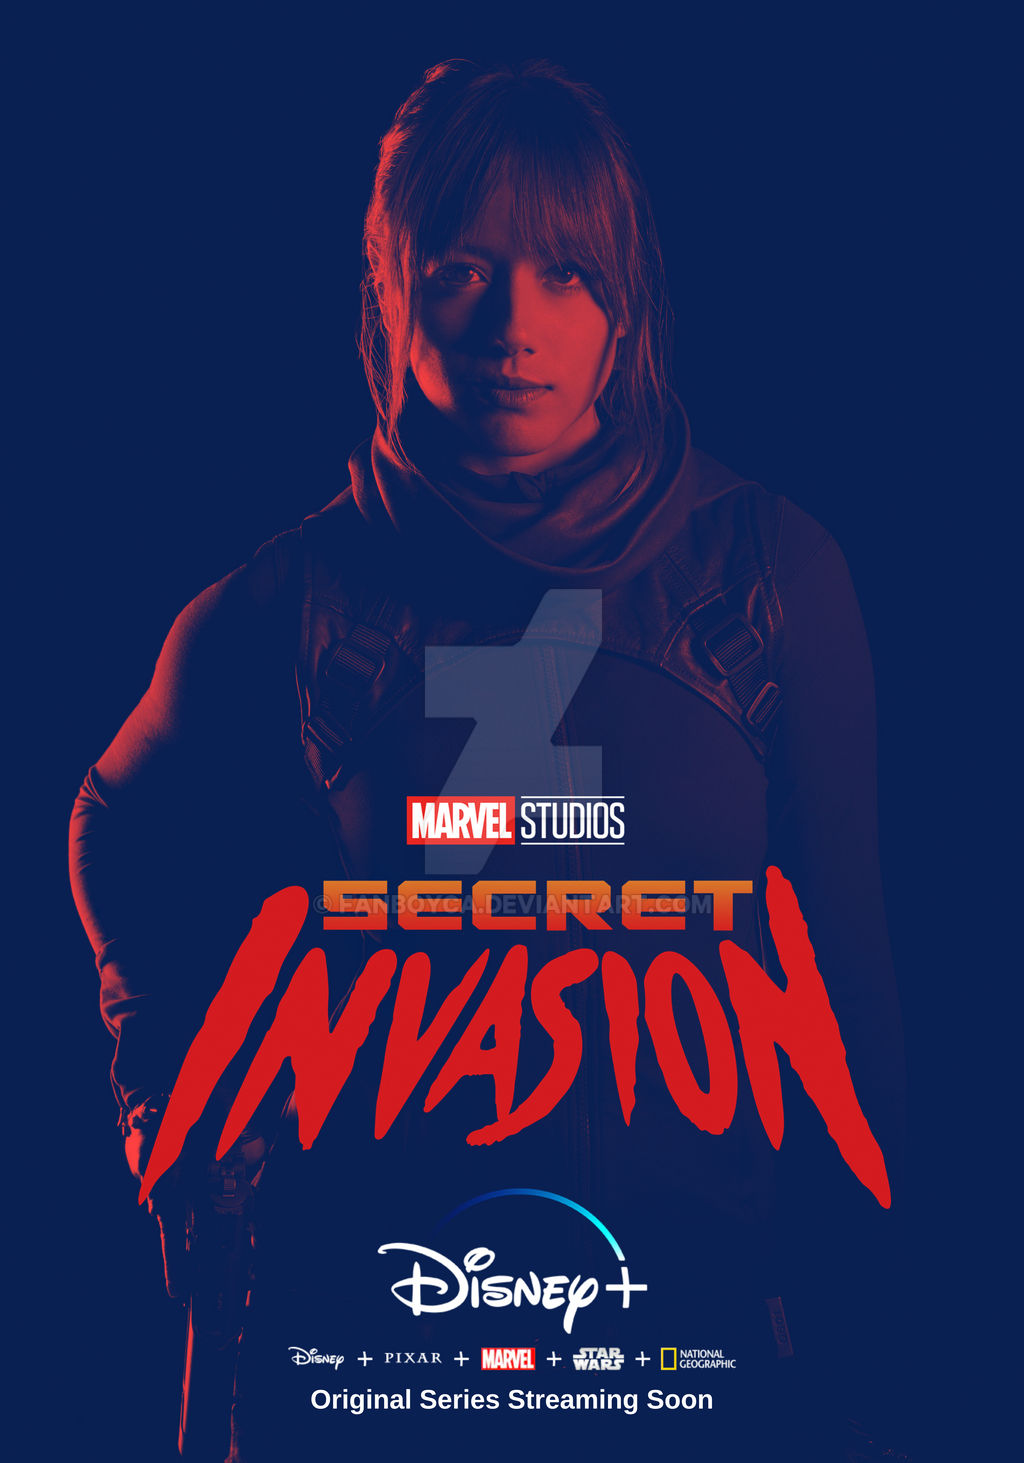 Secret Invasion - Fan Poster by siefrancis on DeviantArt